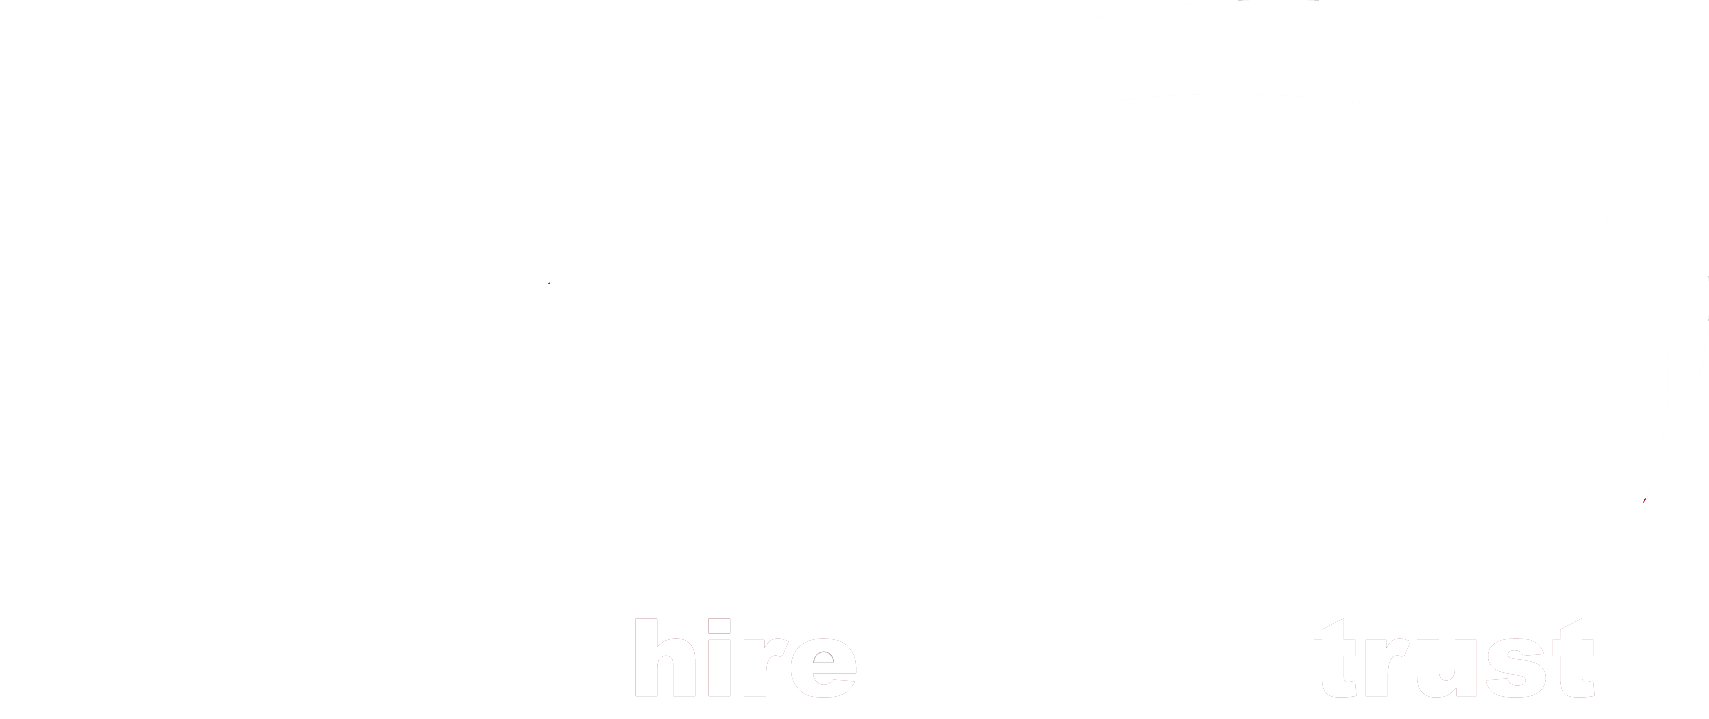 United Rental Logo